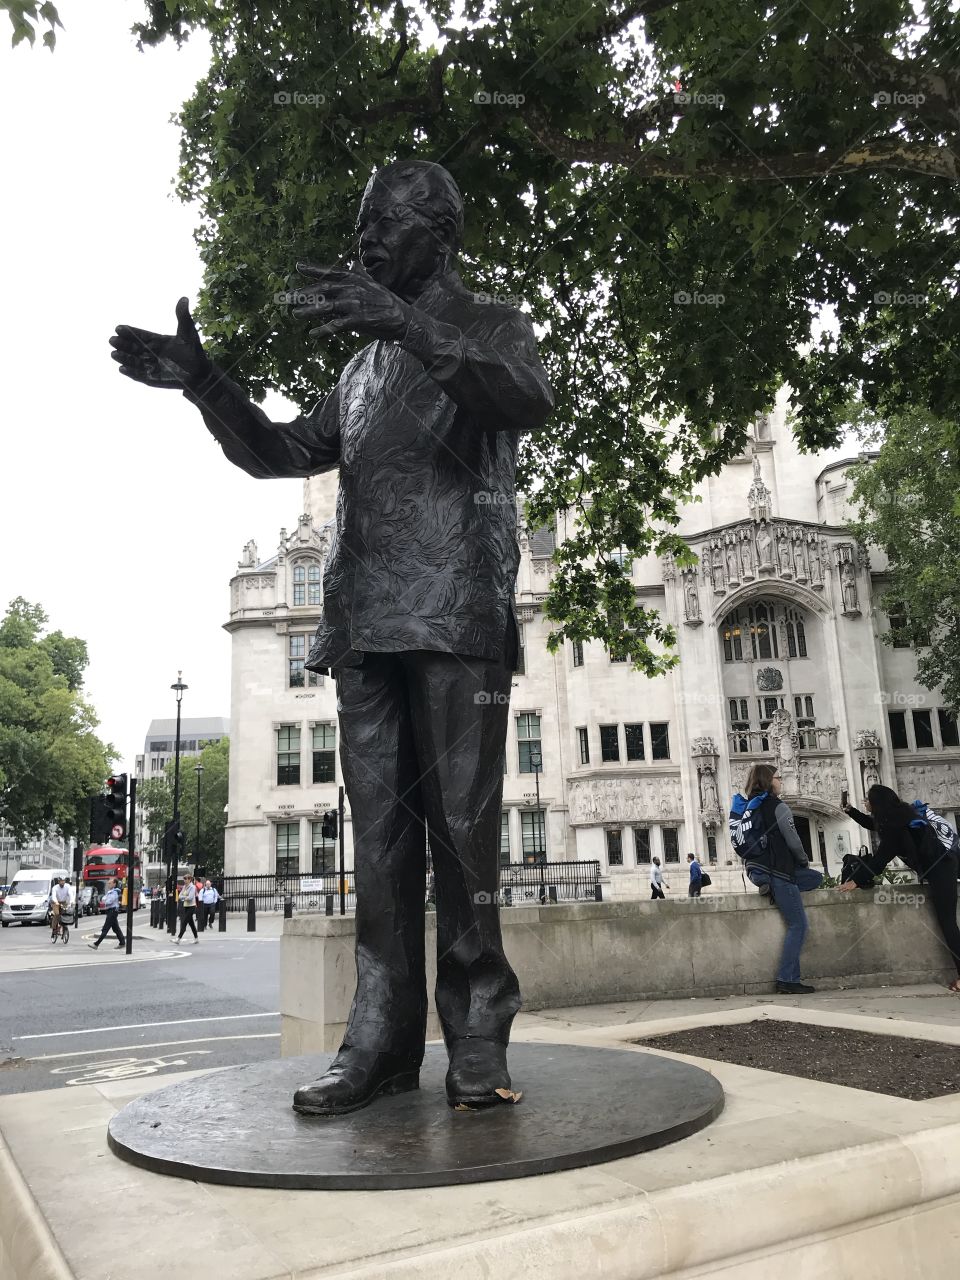 Mandela statue in London 